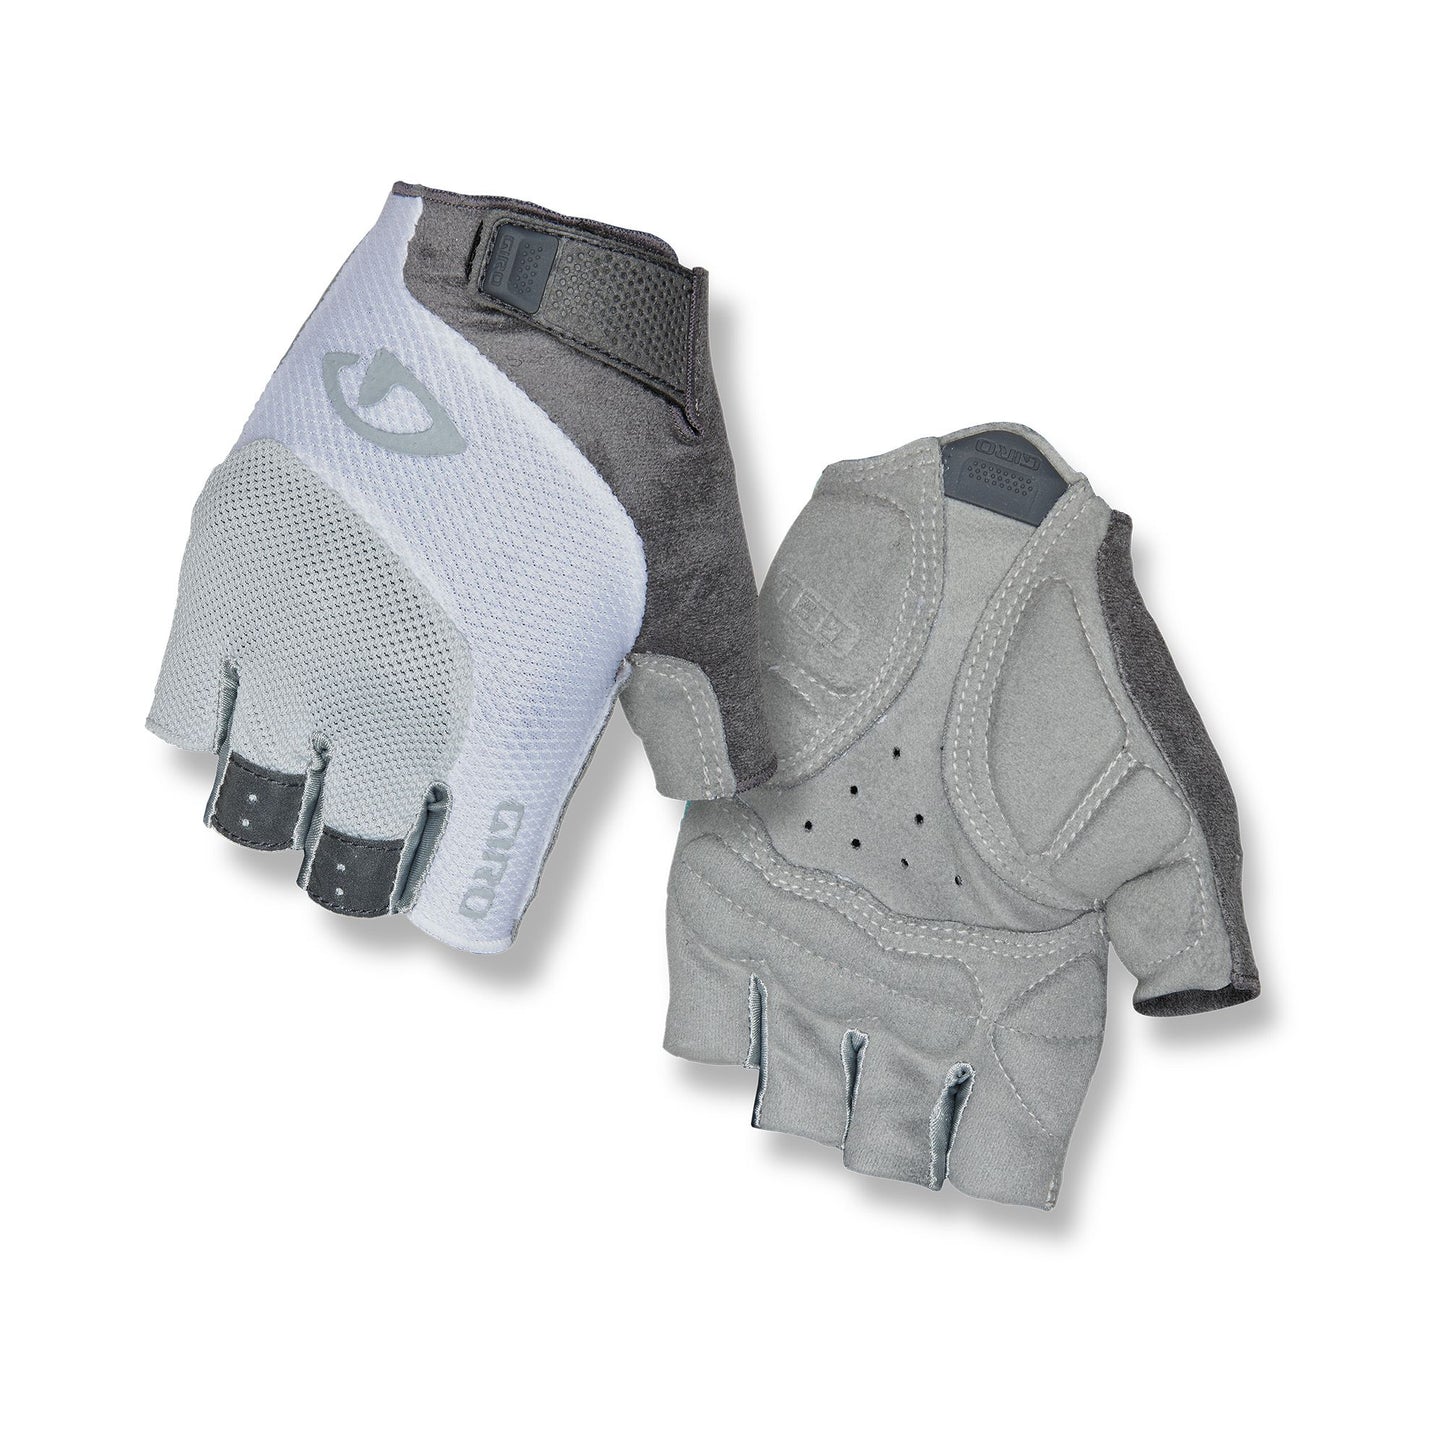 Giro Women's Tessa Gel Glove Grey/White Bike Gloves